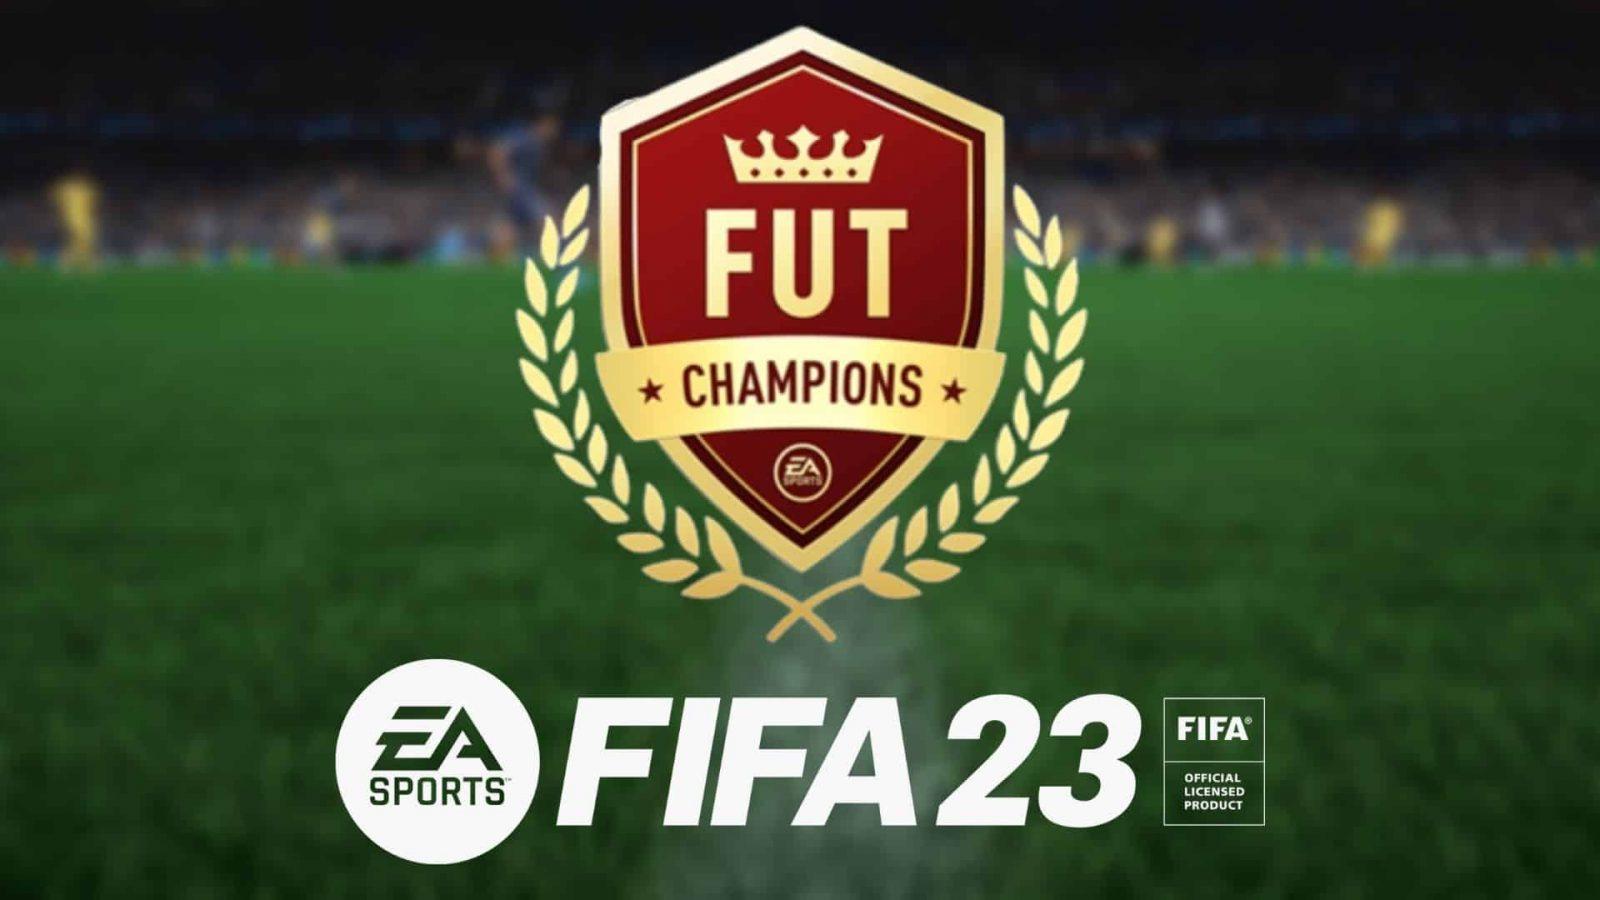 FIFA 22 FUT Champs Play-Offs & Finals rewards, ranks & tips - Dexerto